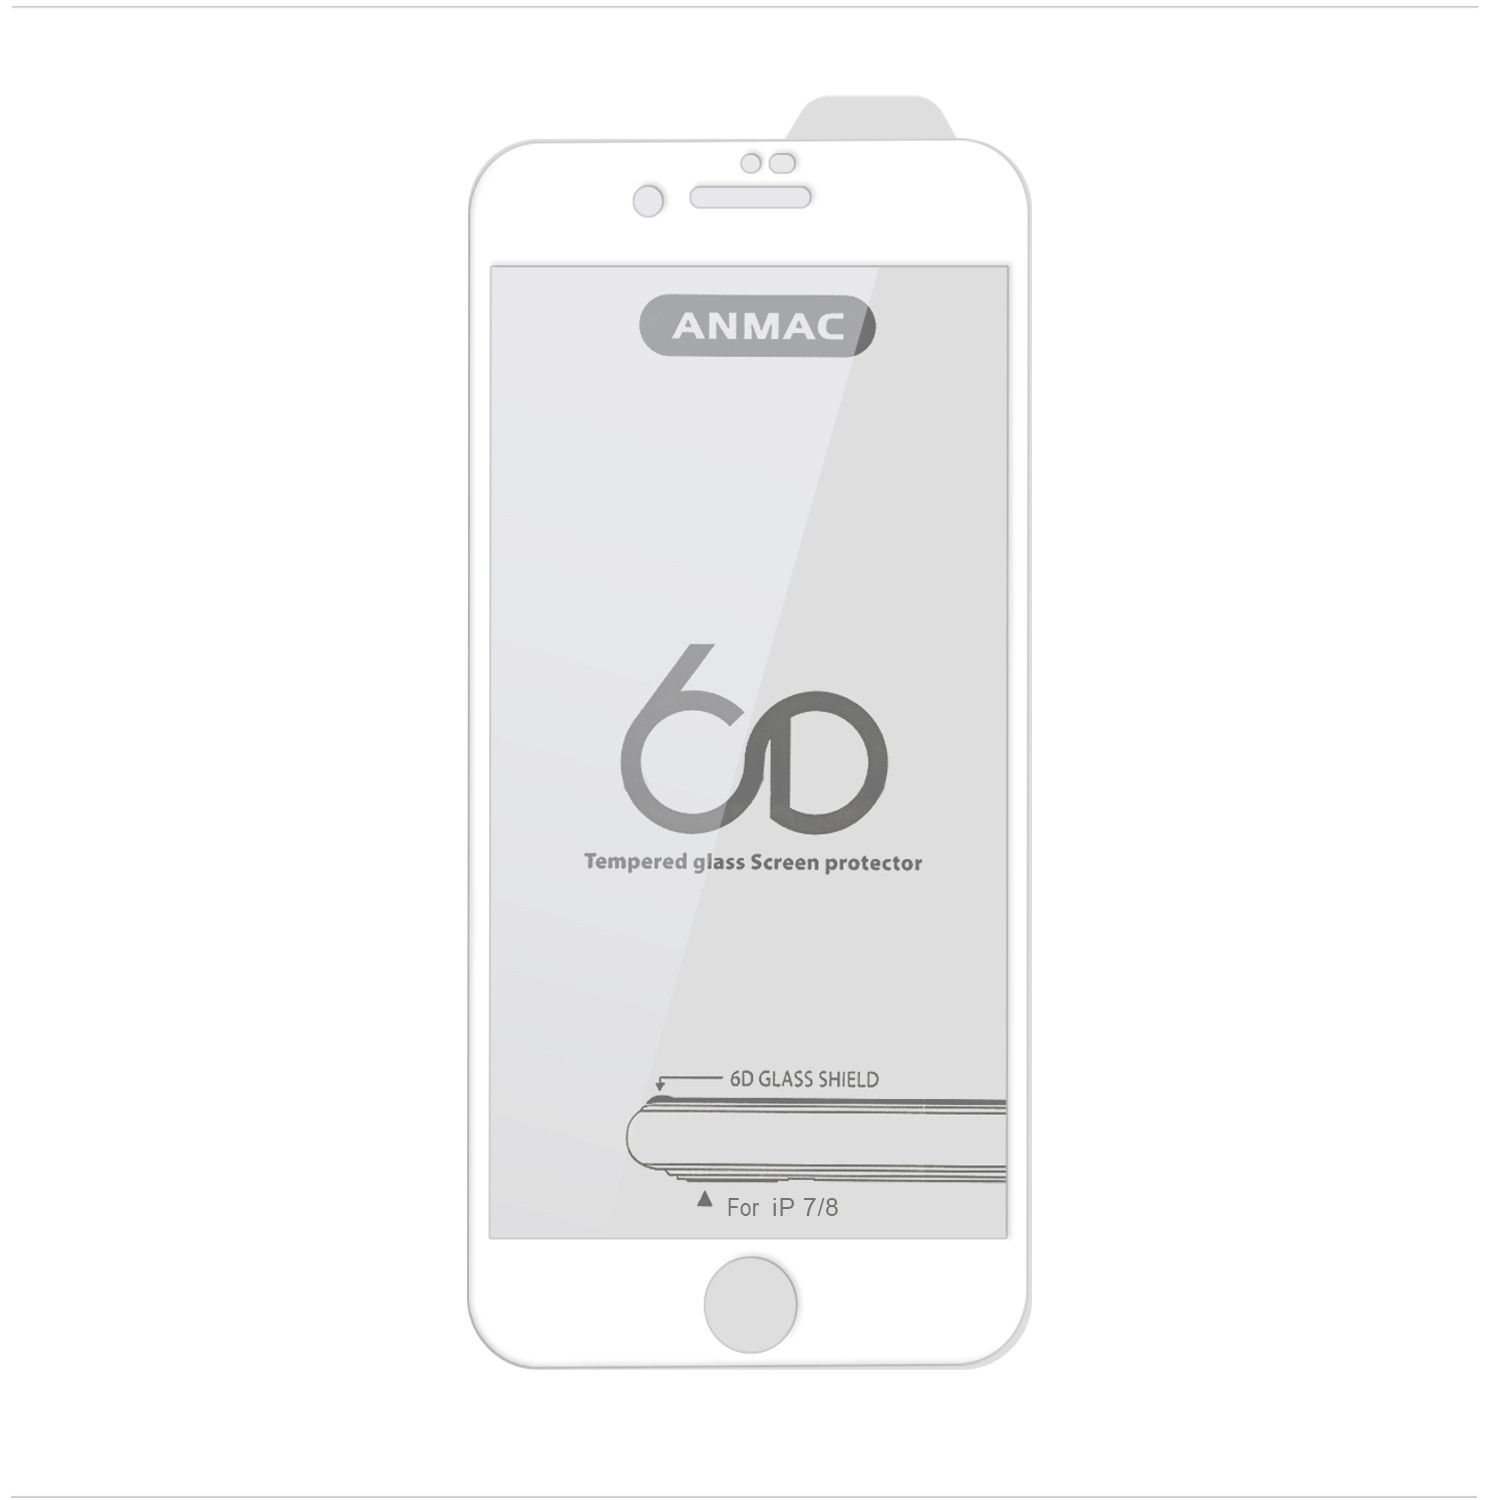 Защитное стекло iPh 7/8 Anmac 6D White без упаковки Арт.1137150